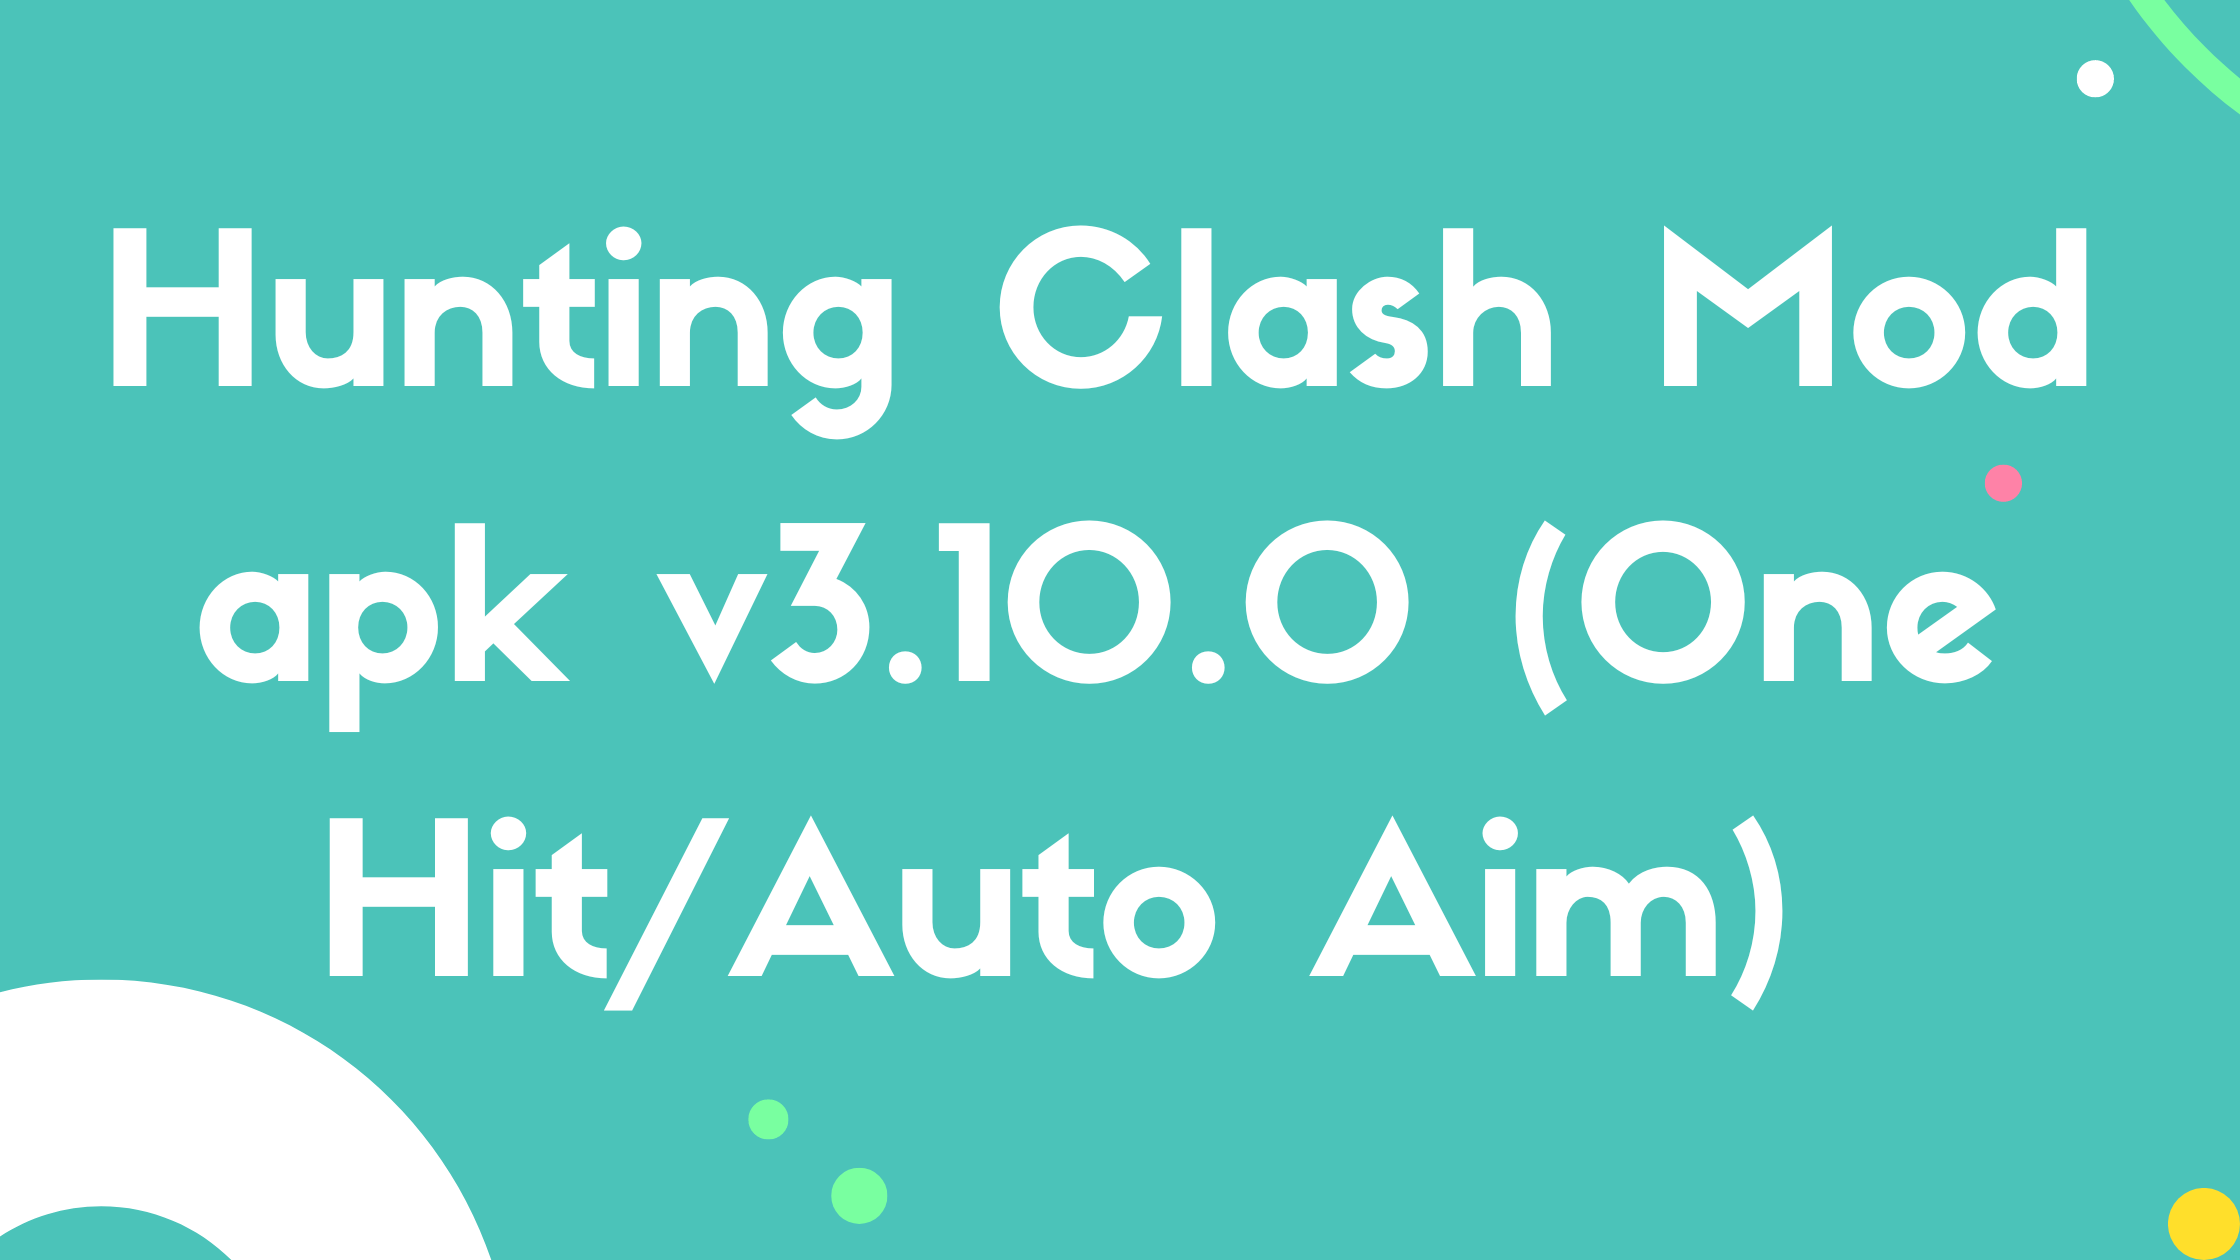 Hunting Clash Mod apk v3.10.0 (One hit/Auto Aim)